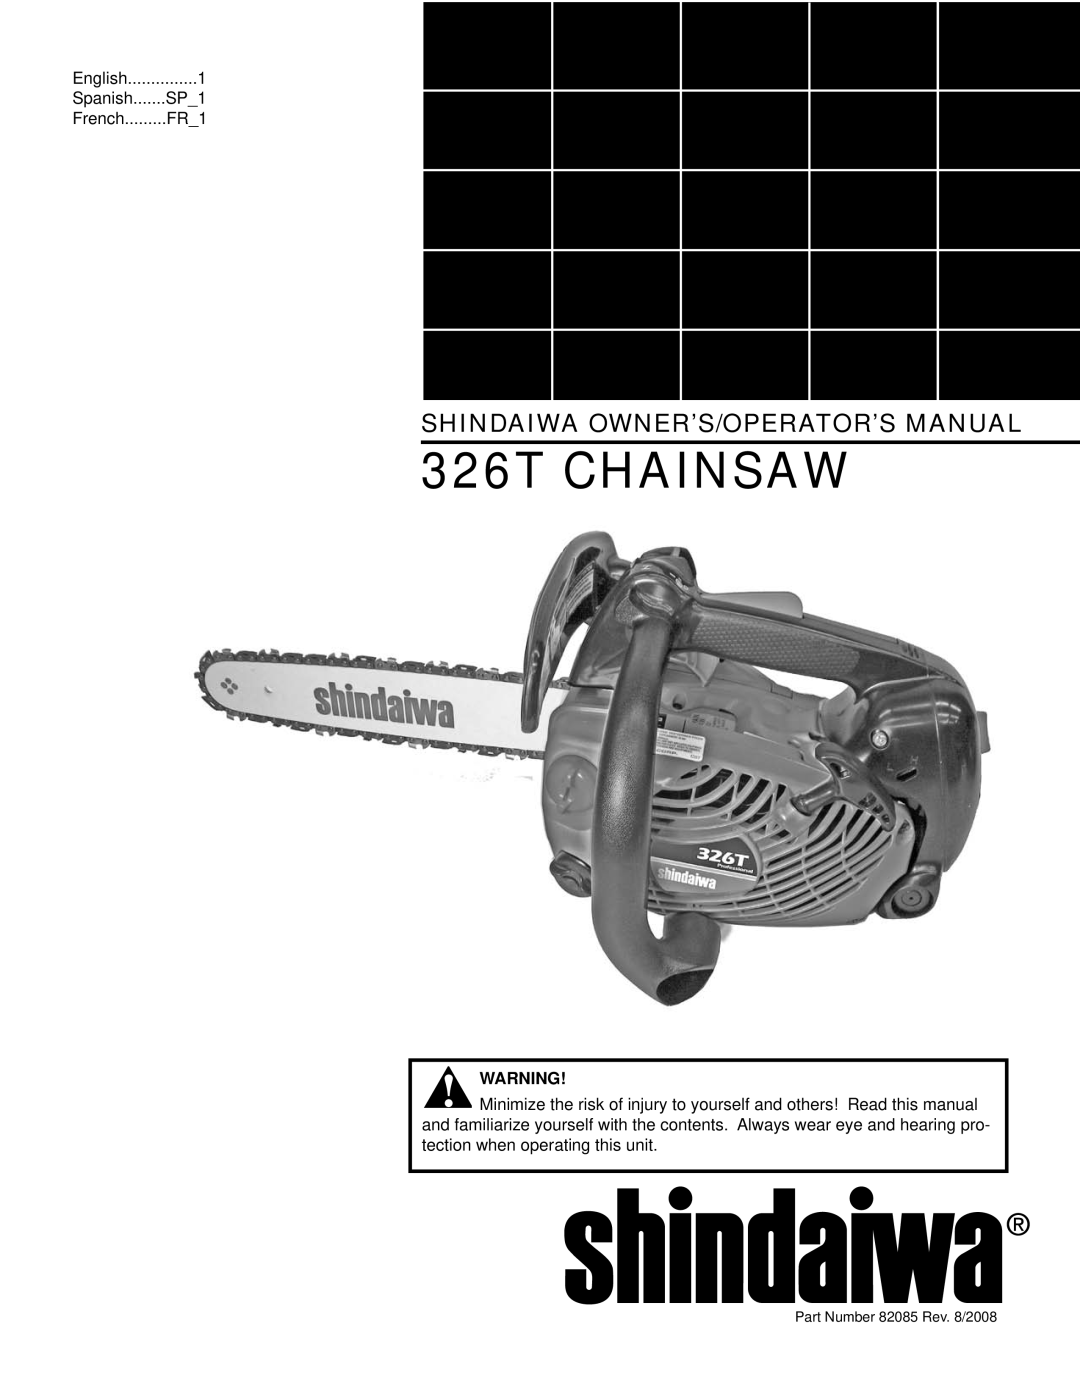 Shindaiwa 82085 manual 326T CHAINSAW, Shindaiwa Owner’S/Operator’S Manual, Spanish, SP_1, French 